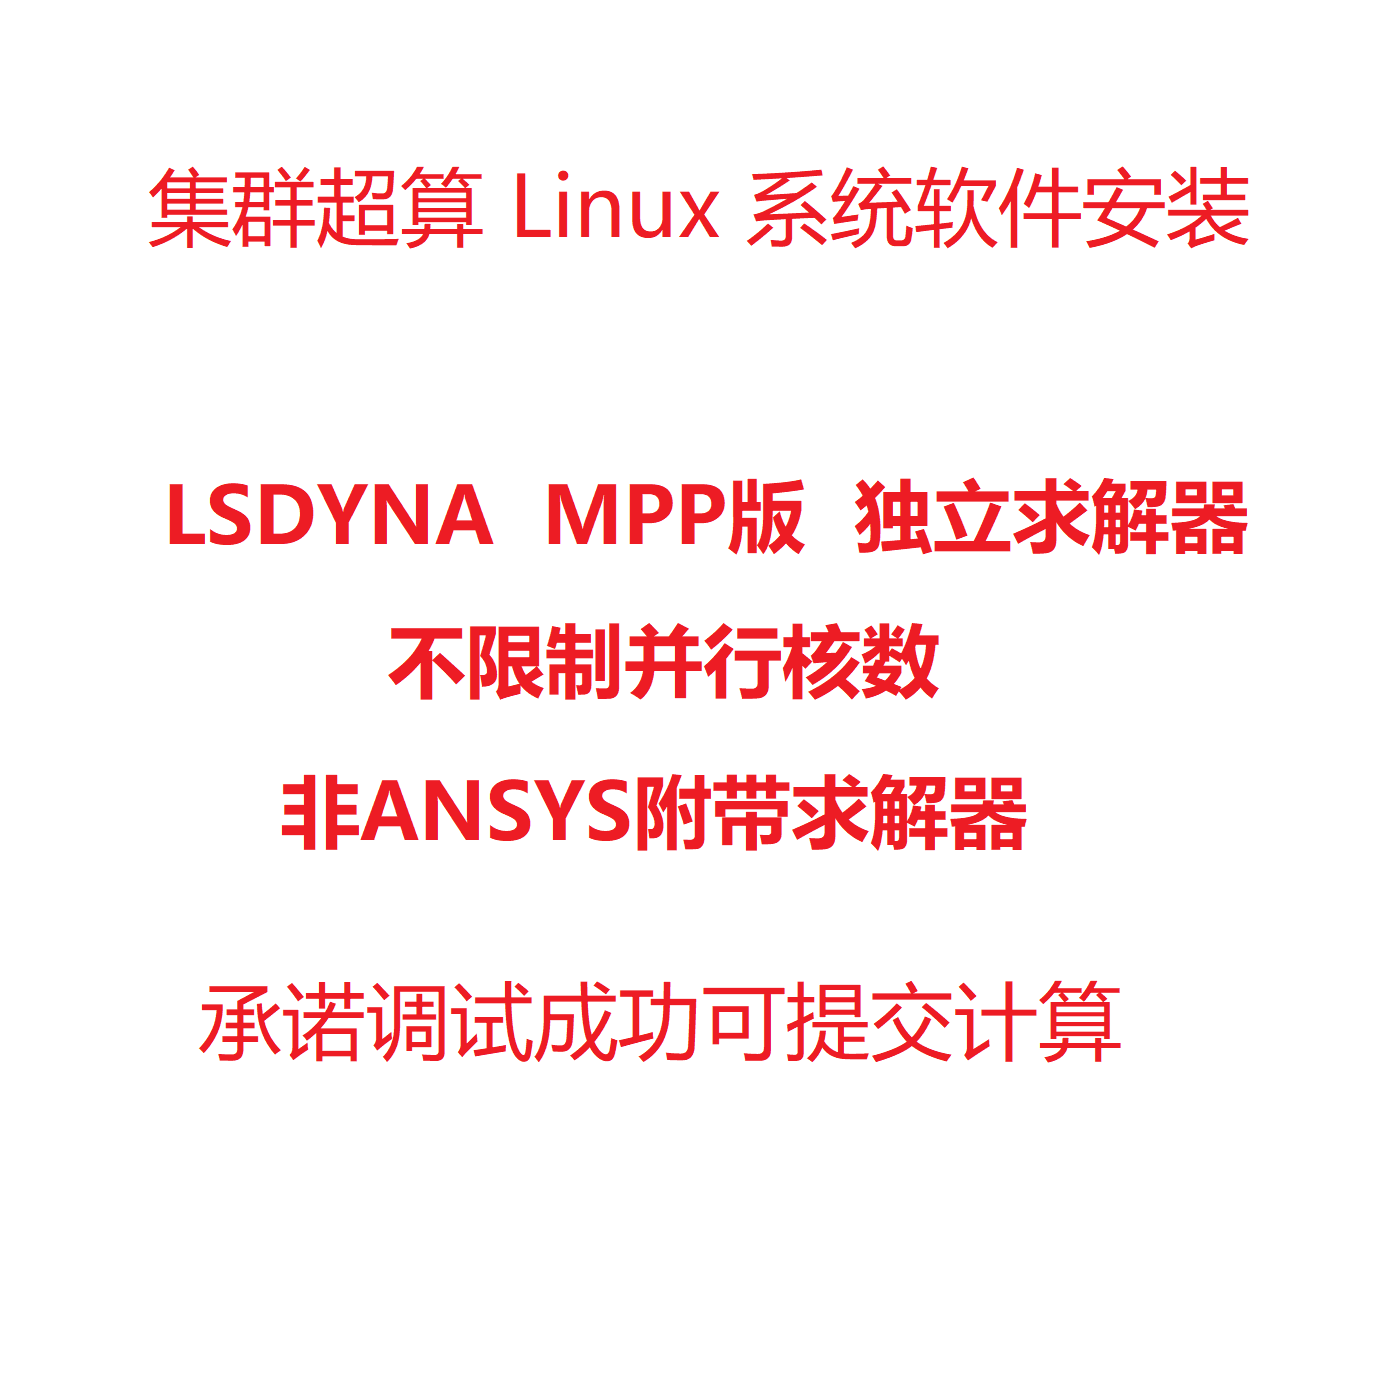 Linux系统 集群超算 CAE软件安装 无需管理员权限